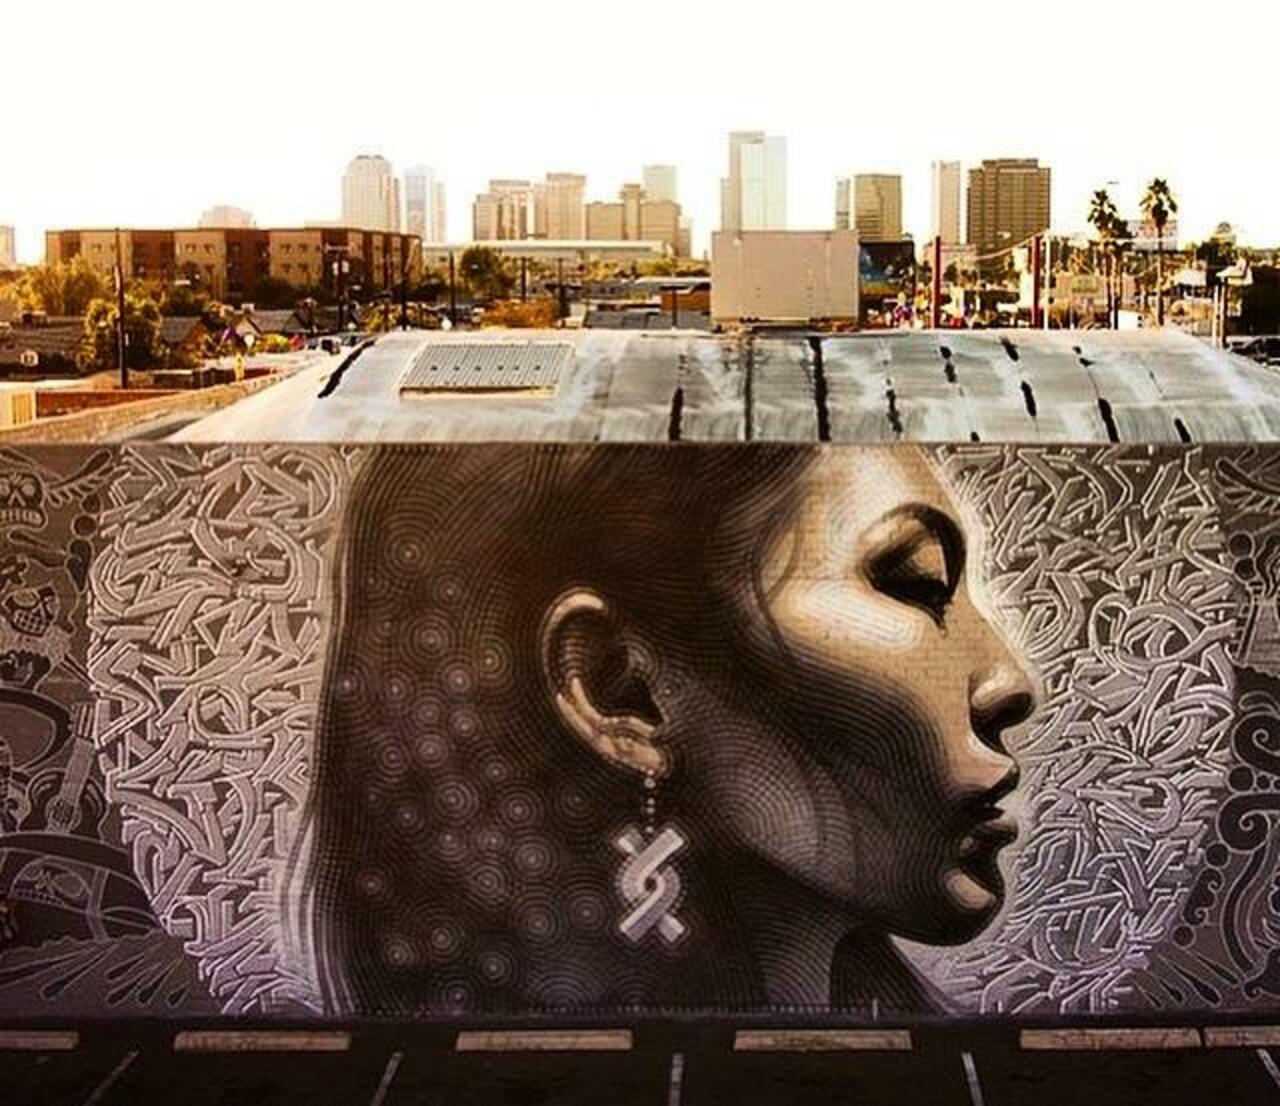 Latest Street Art work by El Mac in Phoenix, Arizona

#art #mural #graffiti #streetart http://t.co/YoDacaRzk0